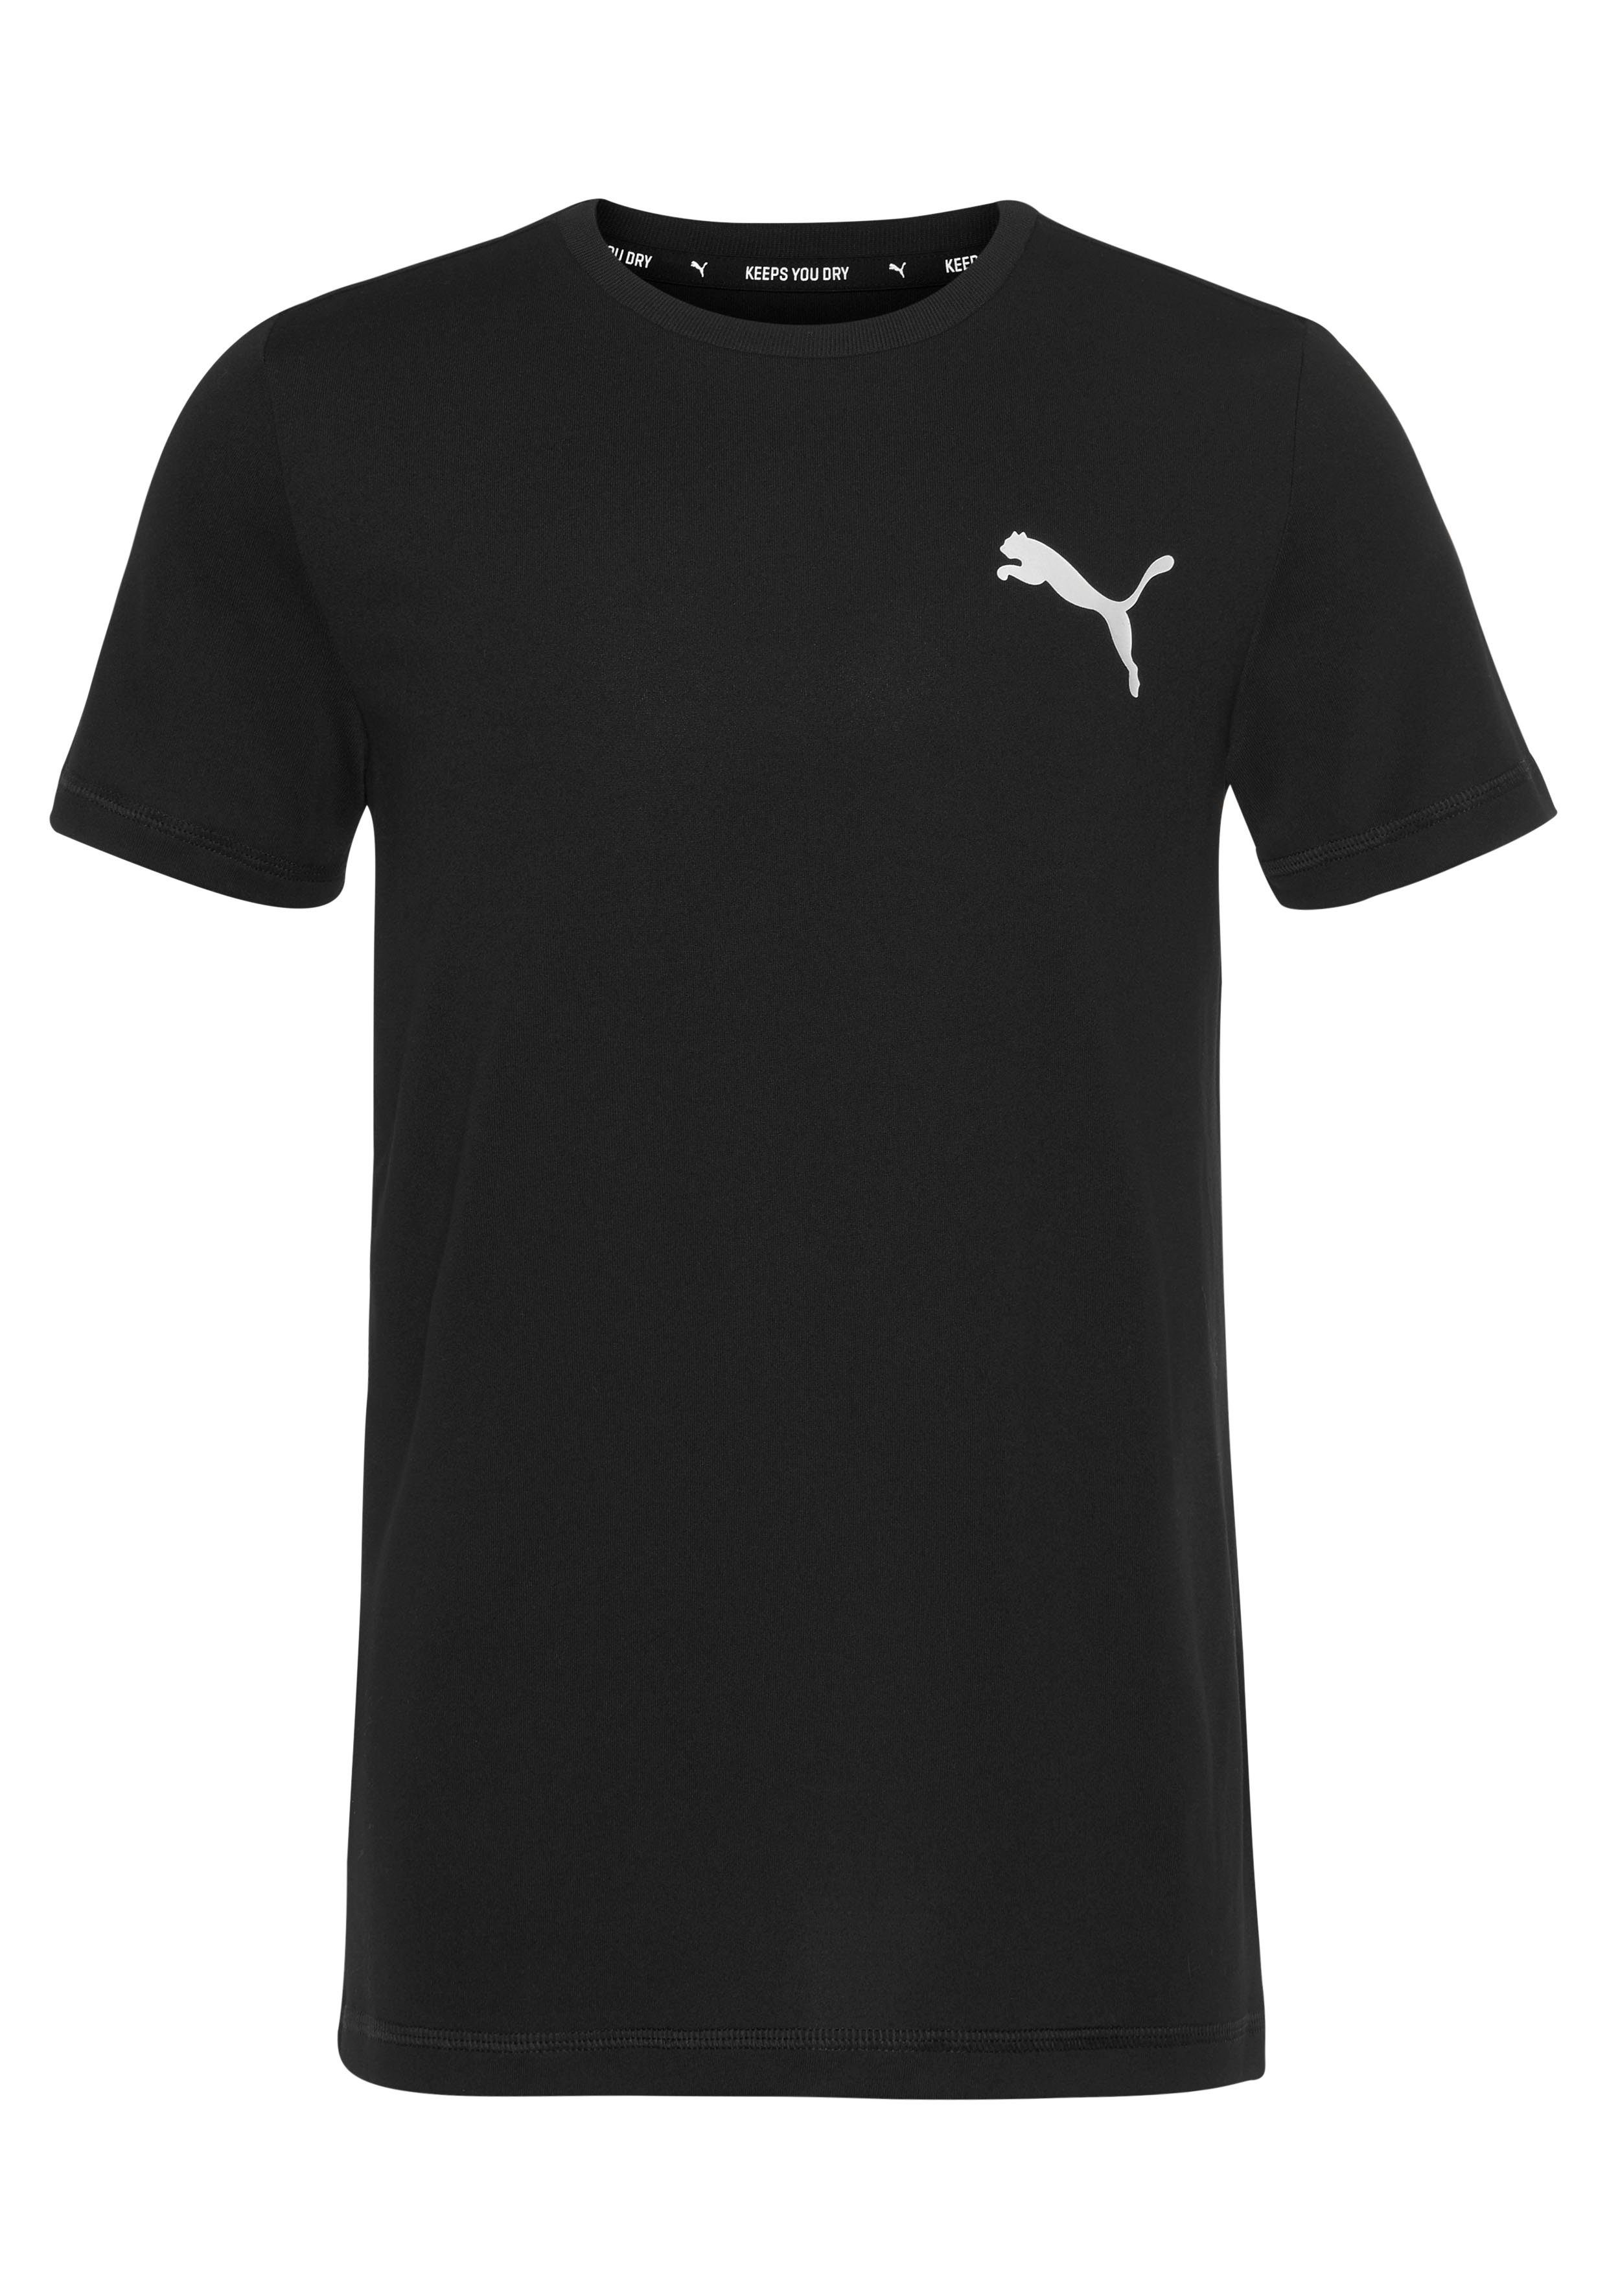 Black T-Shirt TEE B Puma SMALL LOGO ACTIVE PUMA